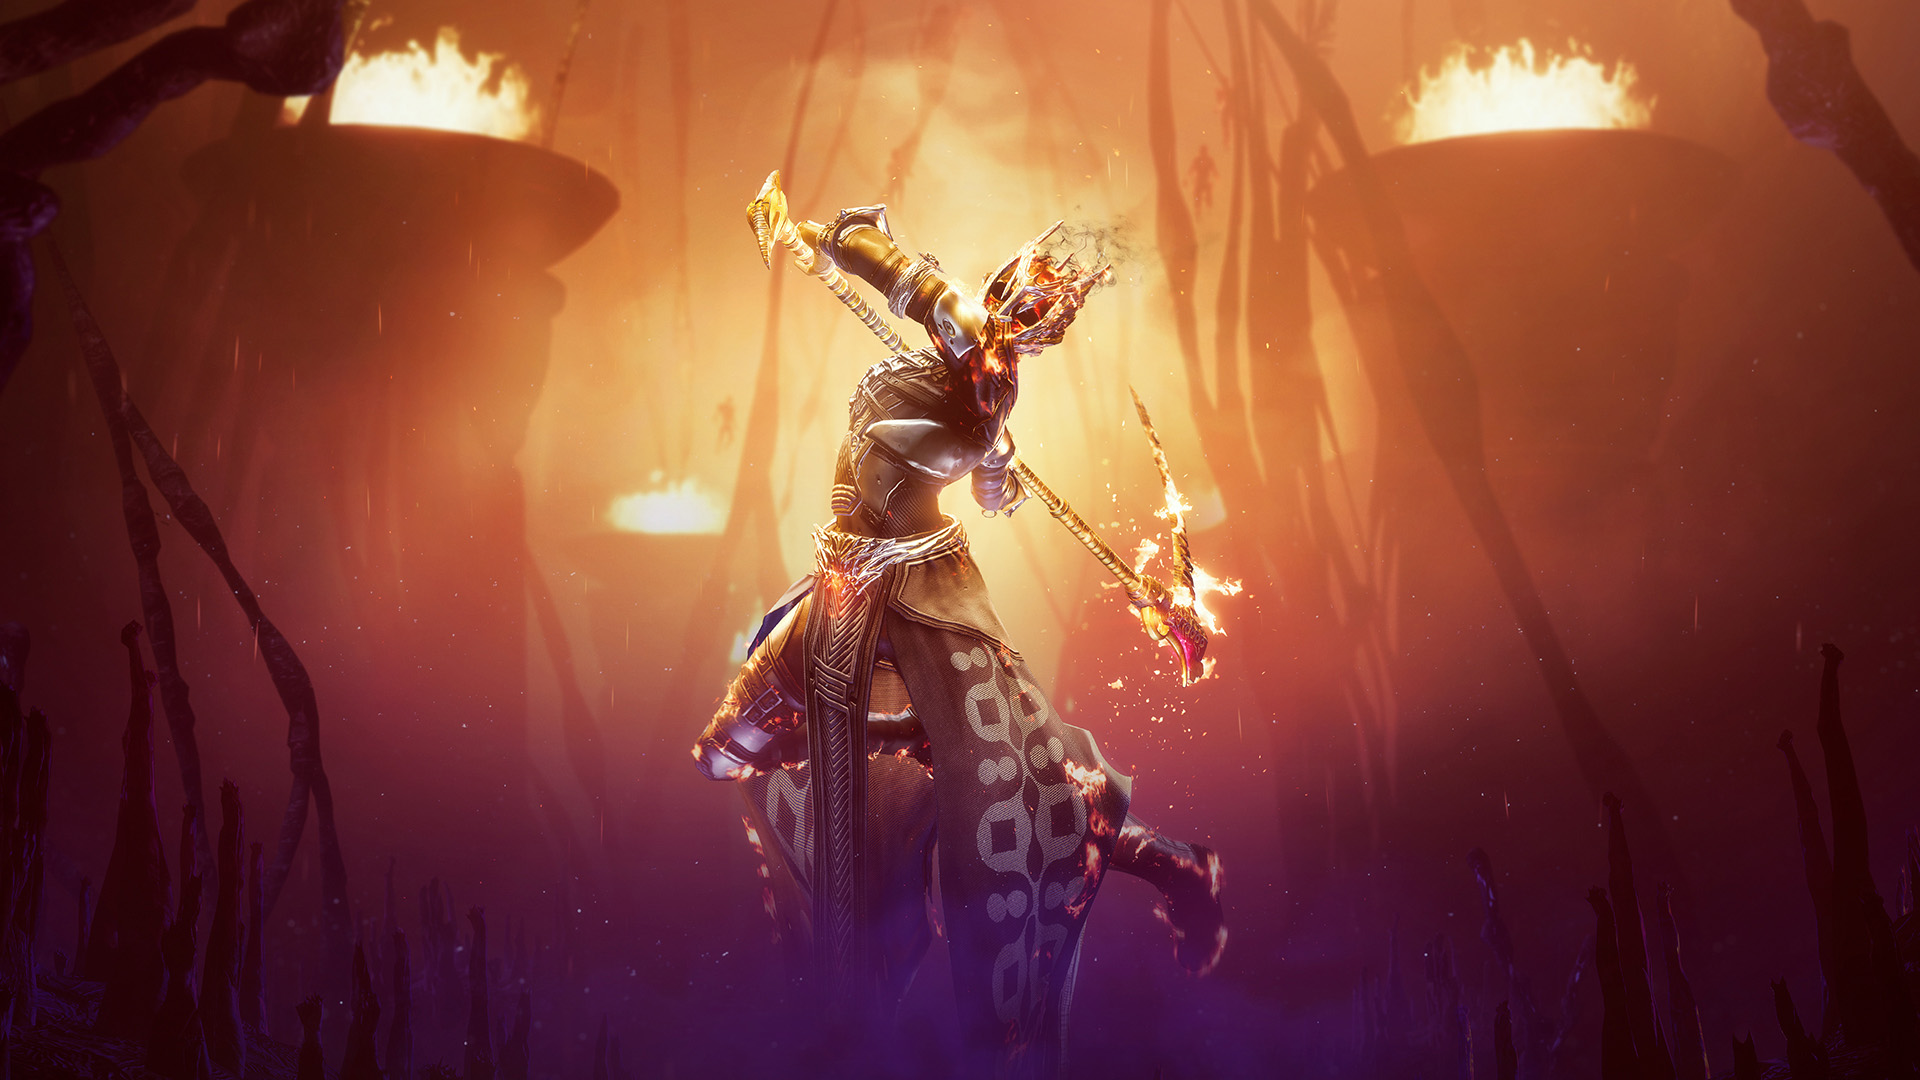 A Warlock swings a flaming scythe in Destiny 2’s Season of the Haunted